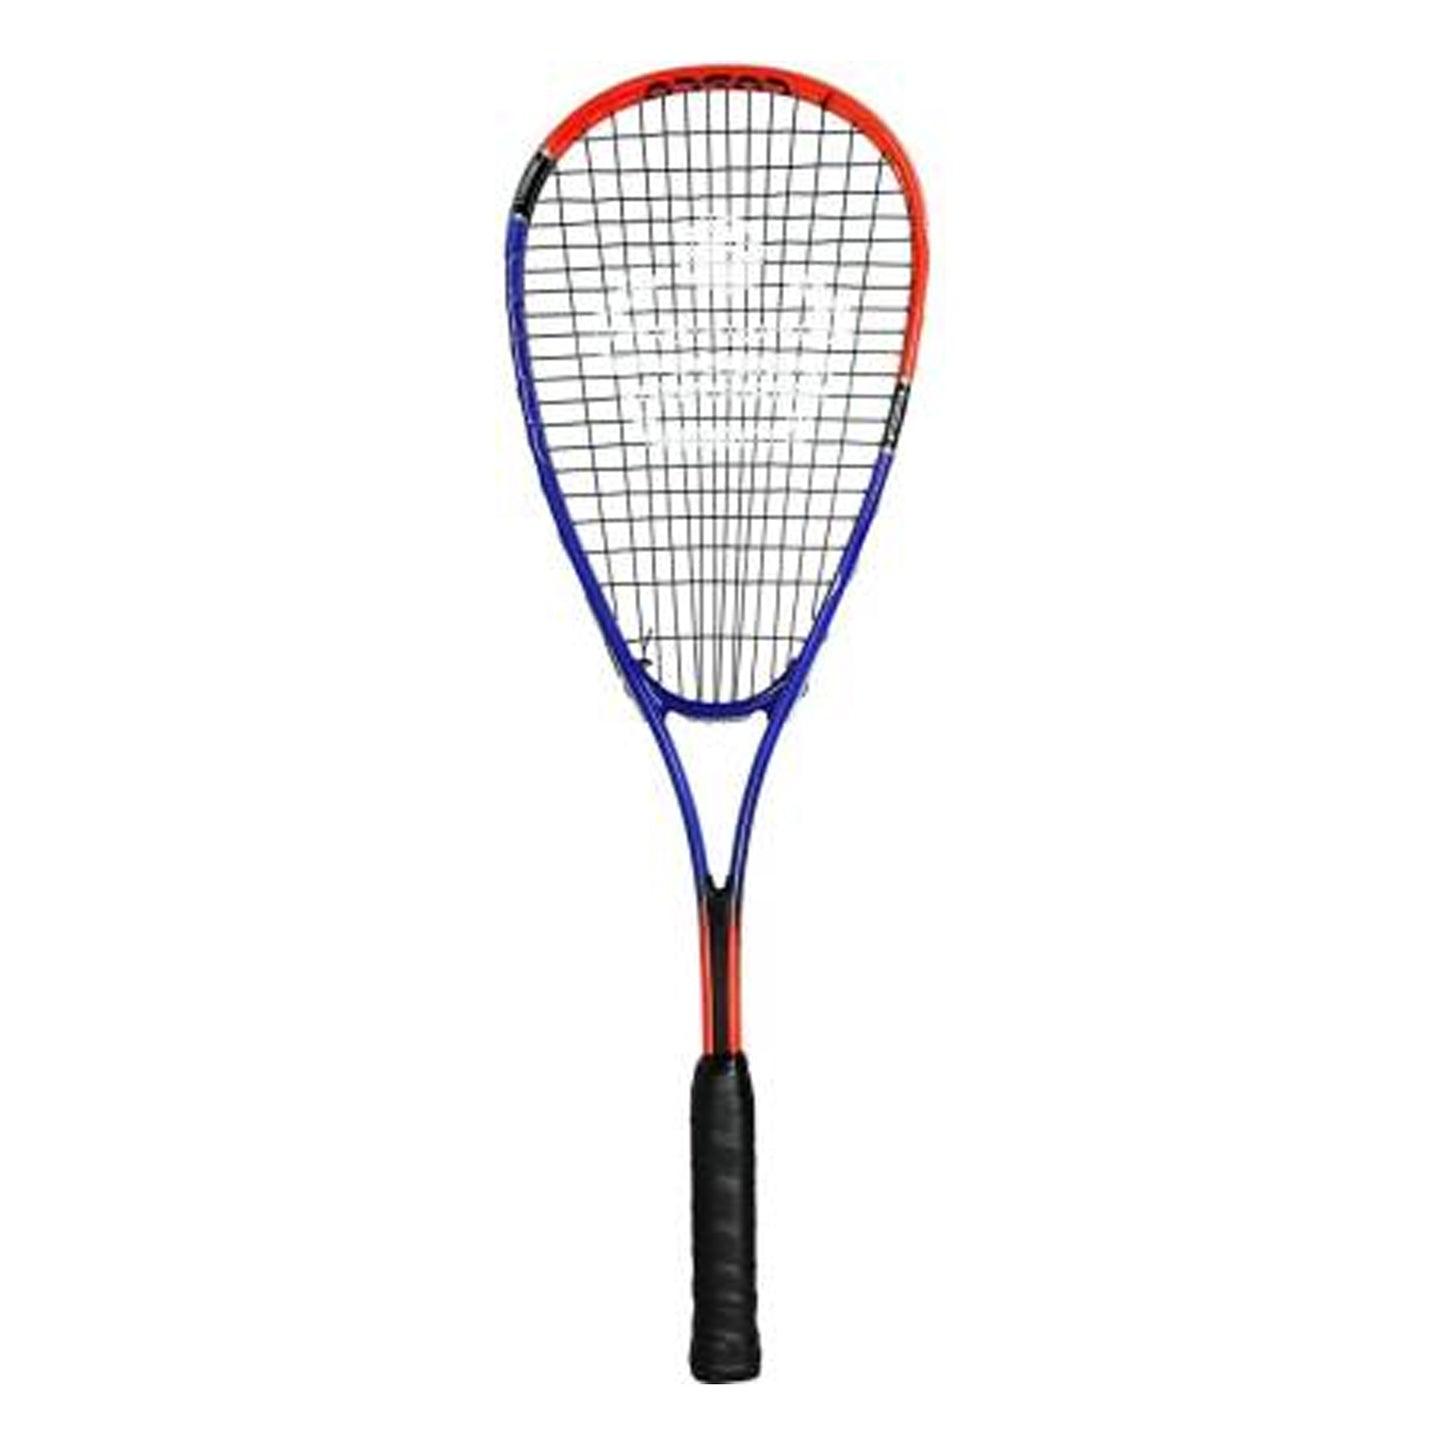 Cosco Power -175 Squash Racquet - Best Price online Prokicksports.com